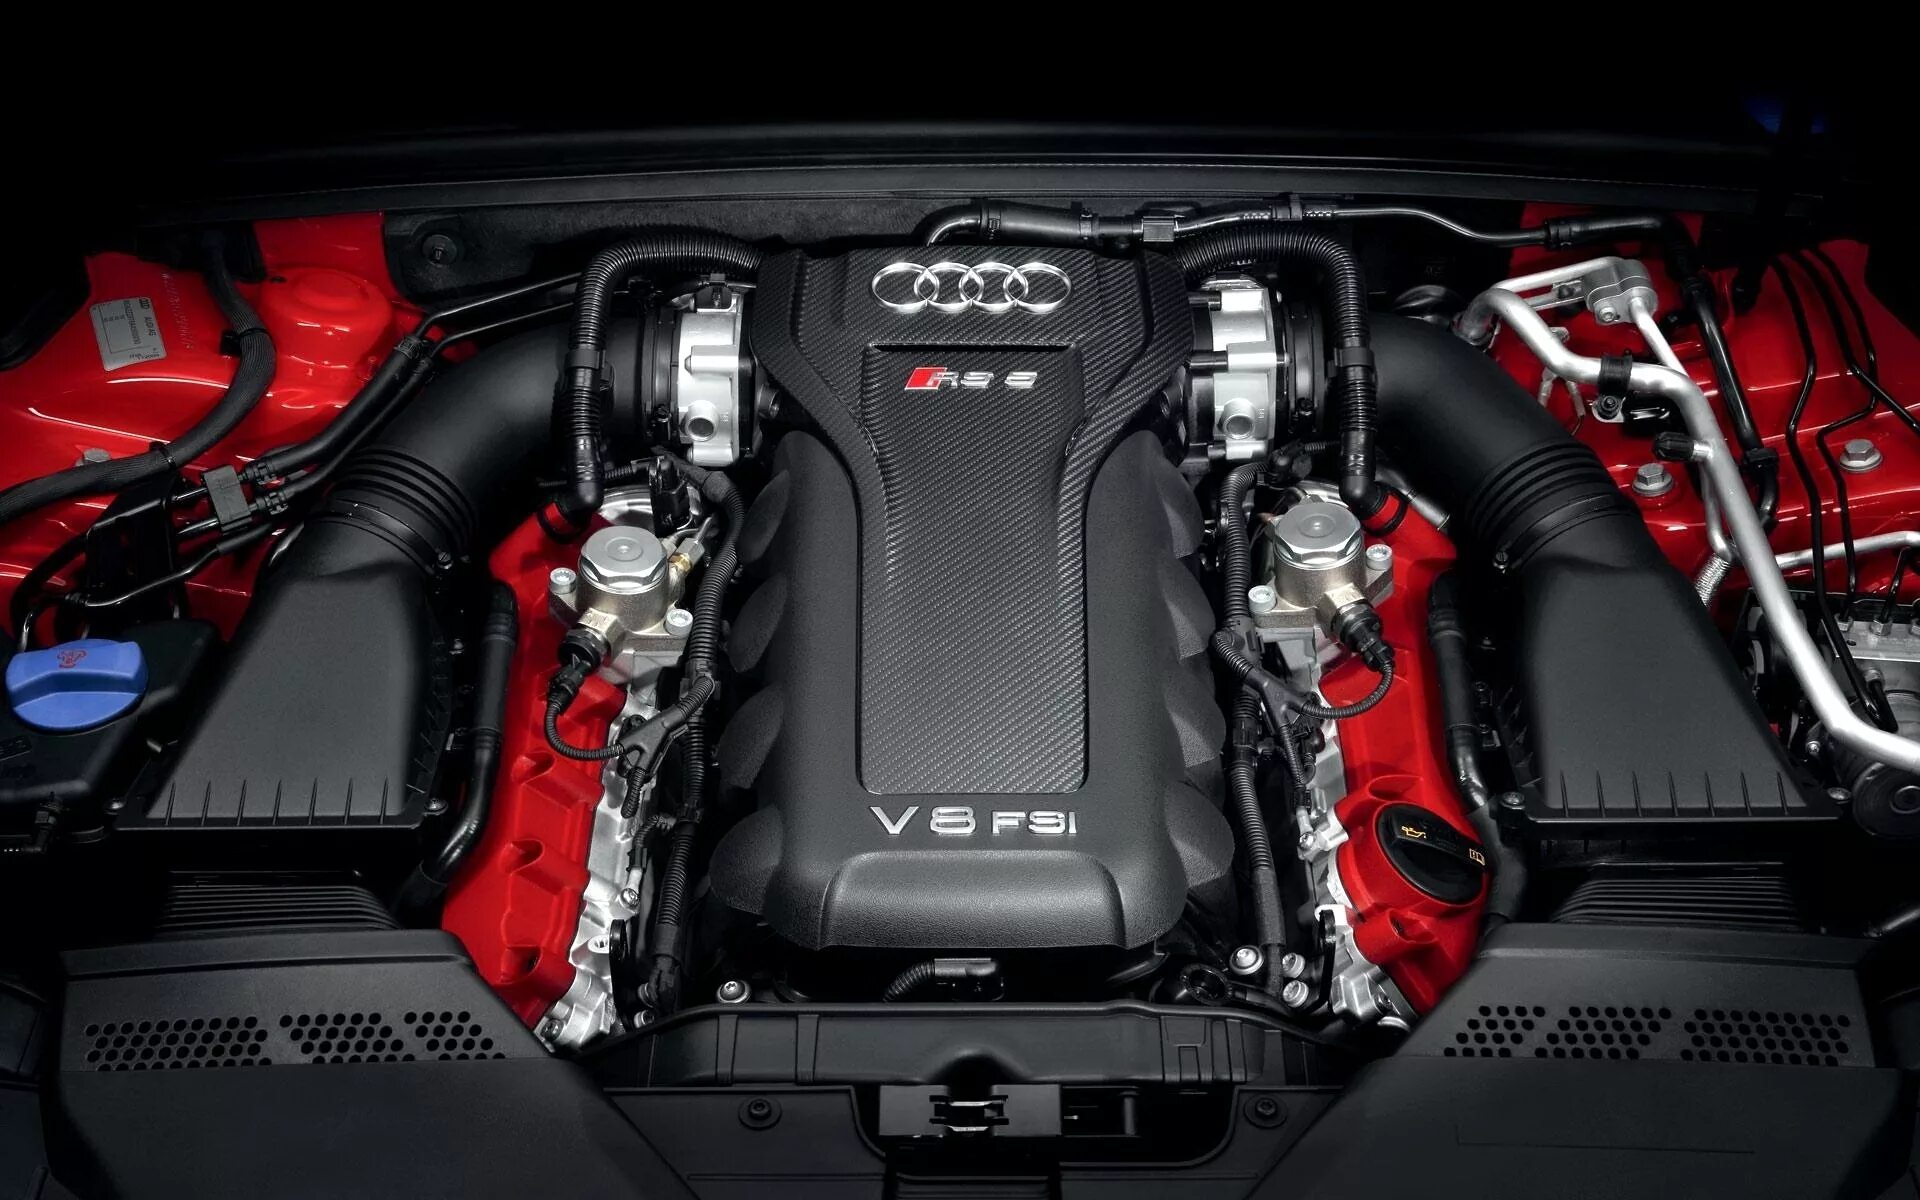 Ауди двиг. Audi rs5 v8. Audi rs5 v8 engine. Двигатель Ауди рс5. Мотор Ауди РС 5 4.2.